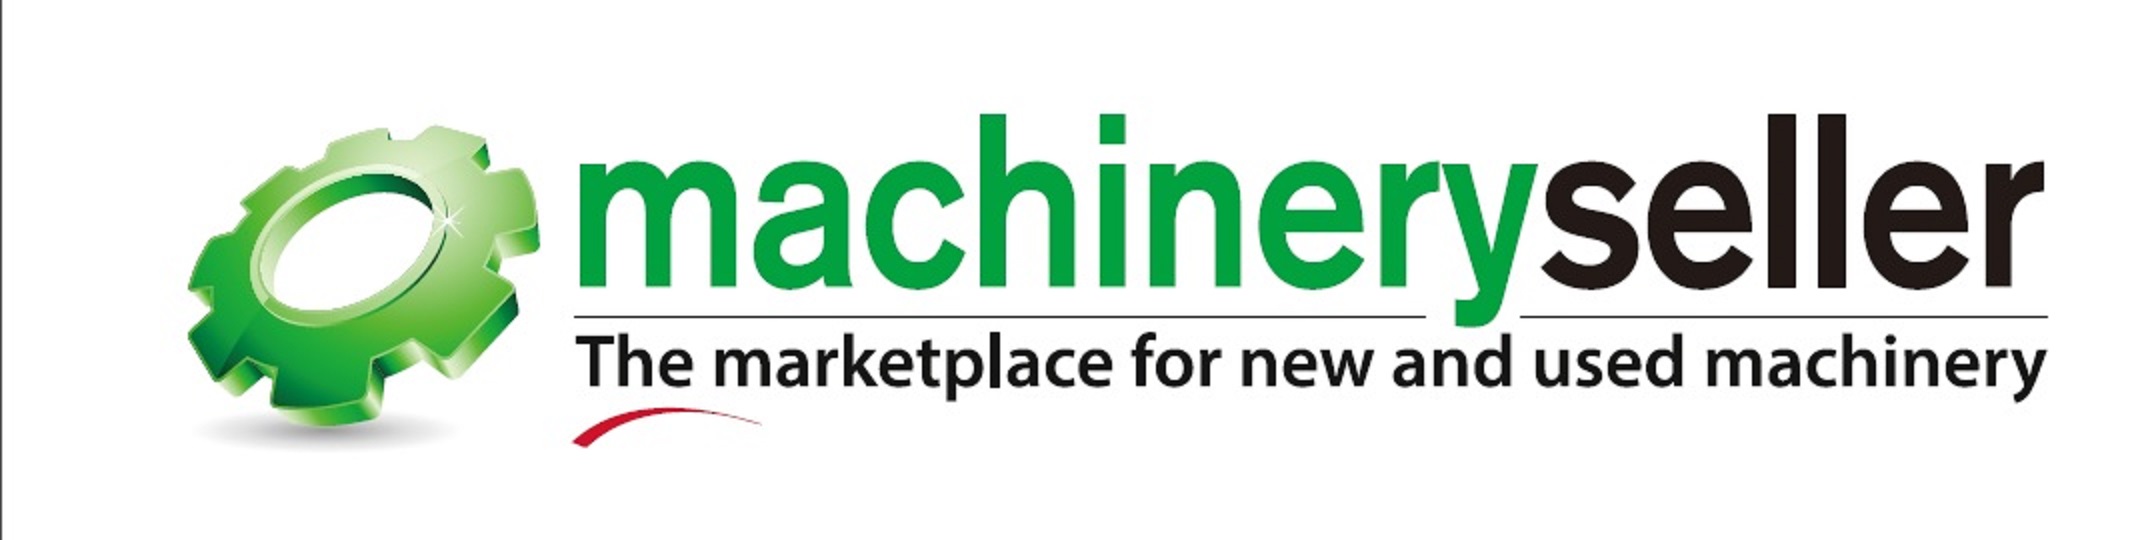 Machinery seller logo 1